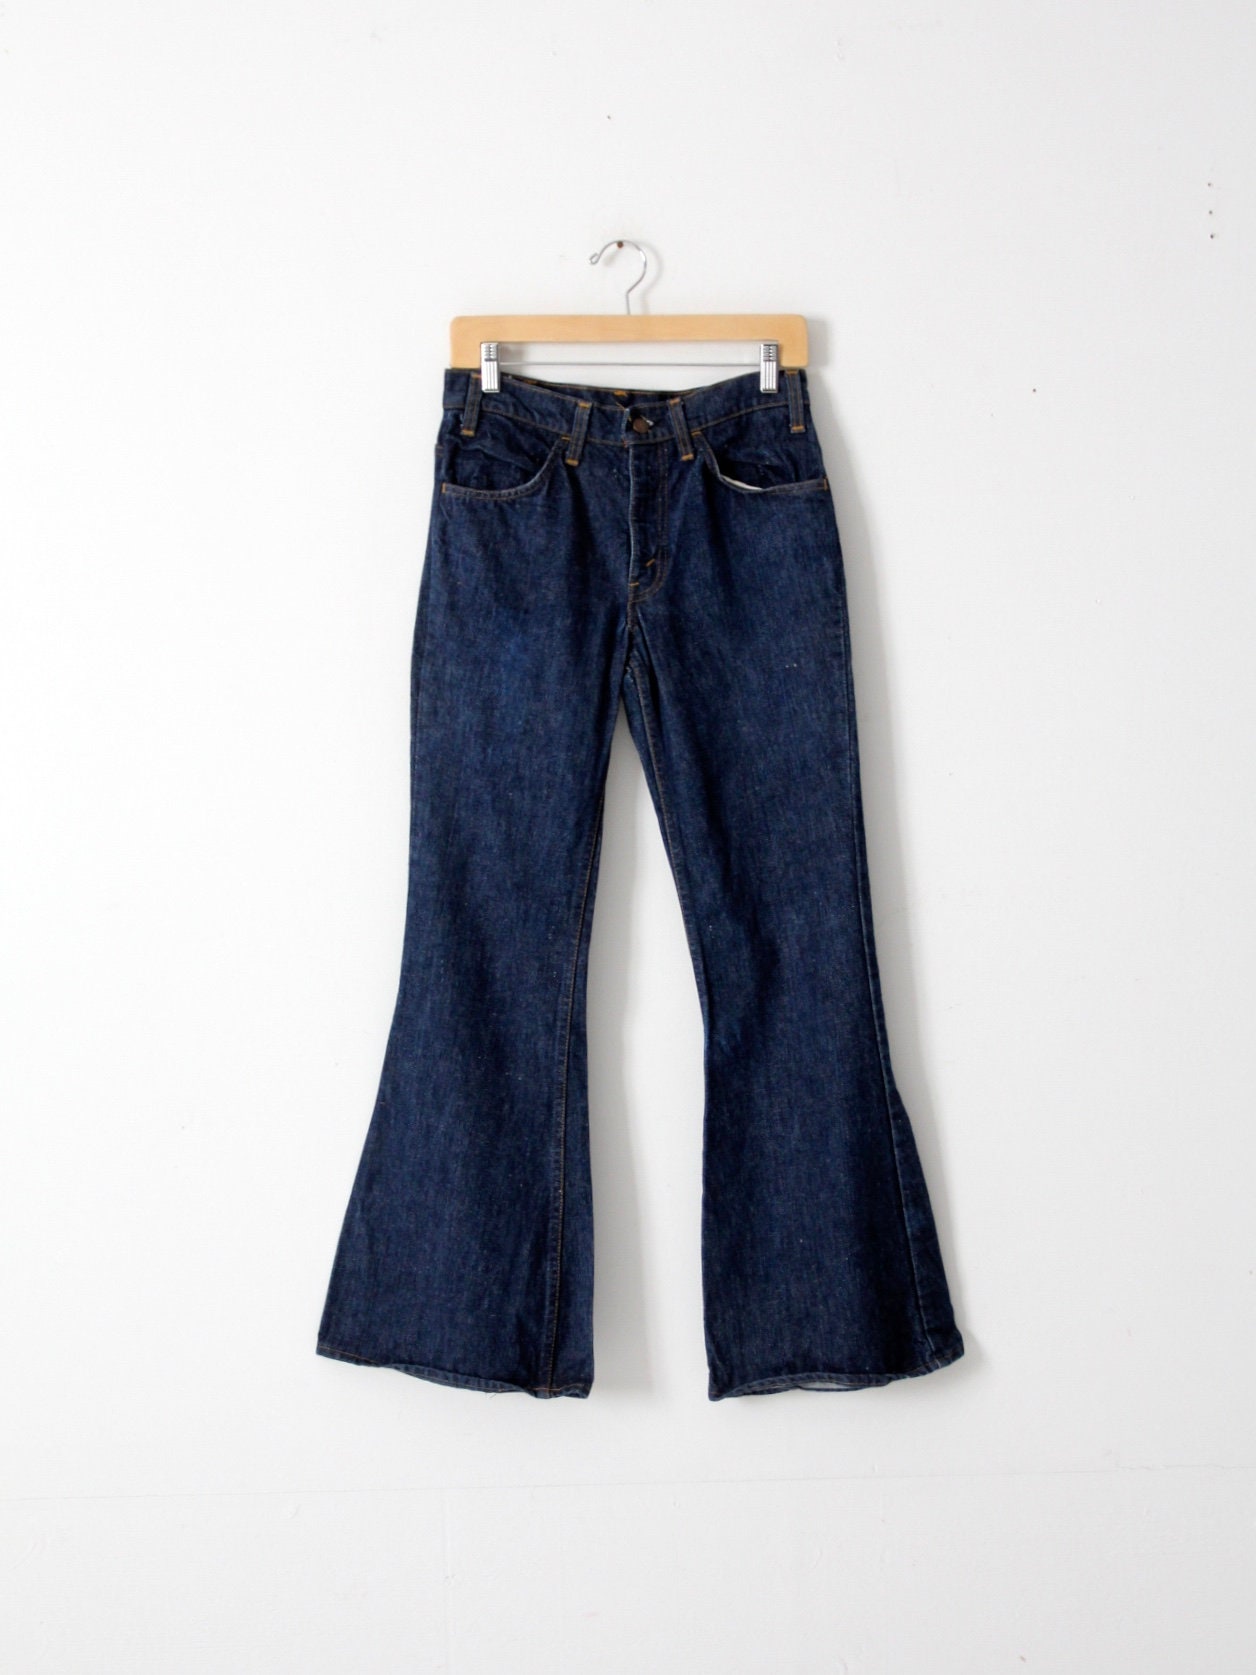 1970s Levis bell bottom jeans 30 x 31, vintage dark wash Levis 684 denim  jeans